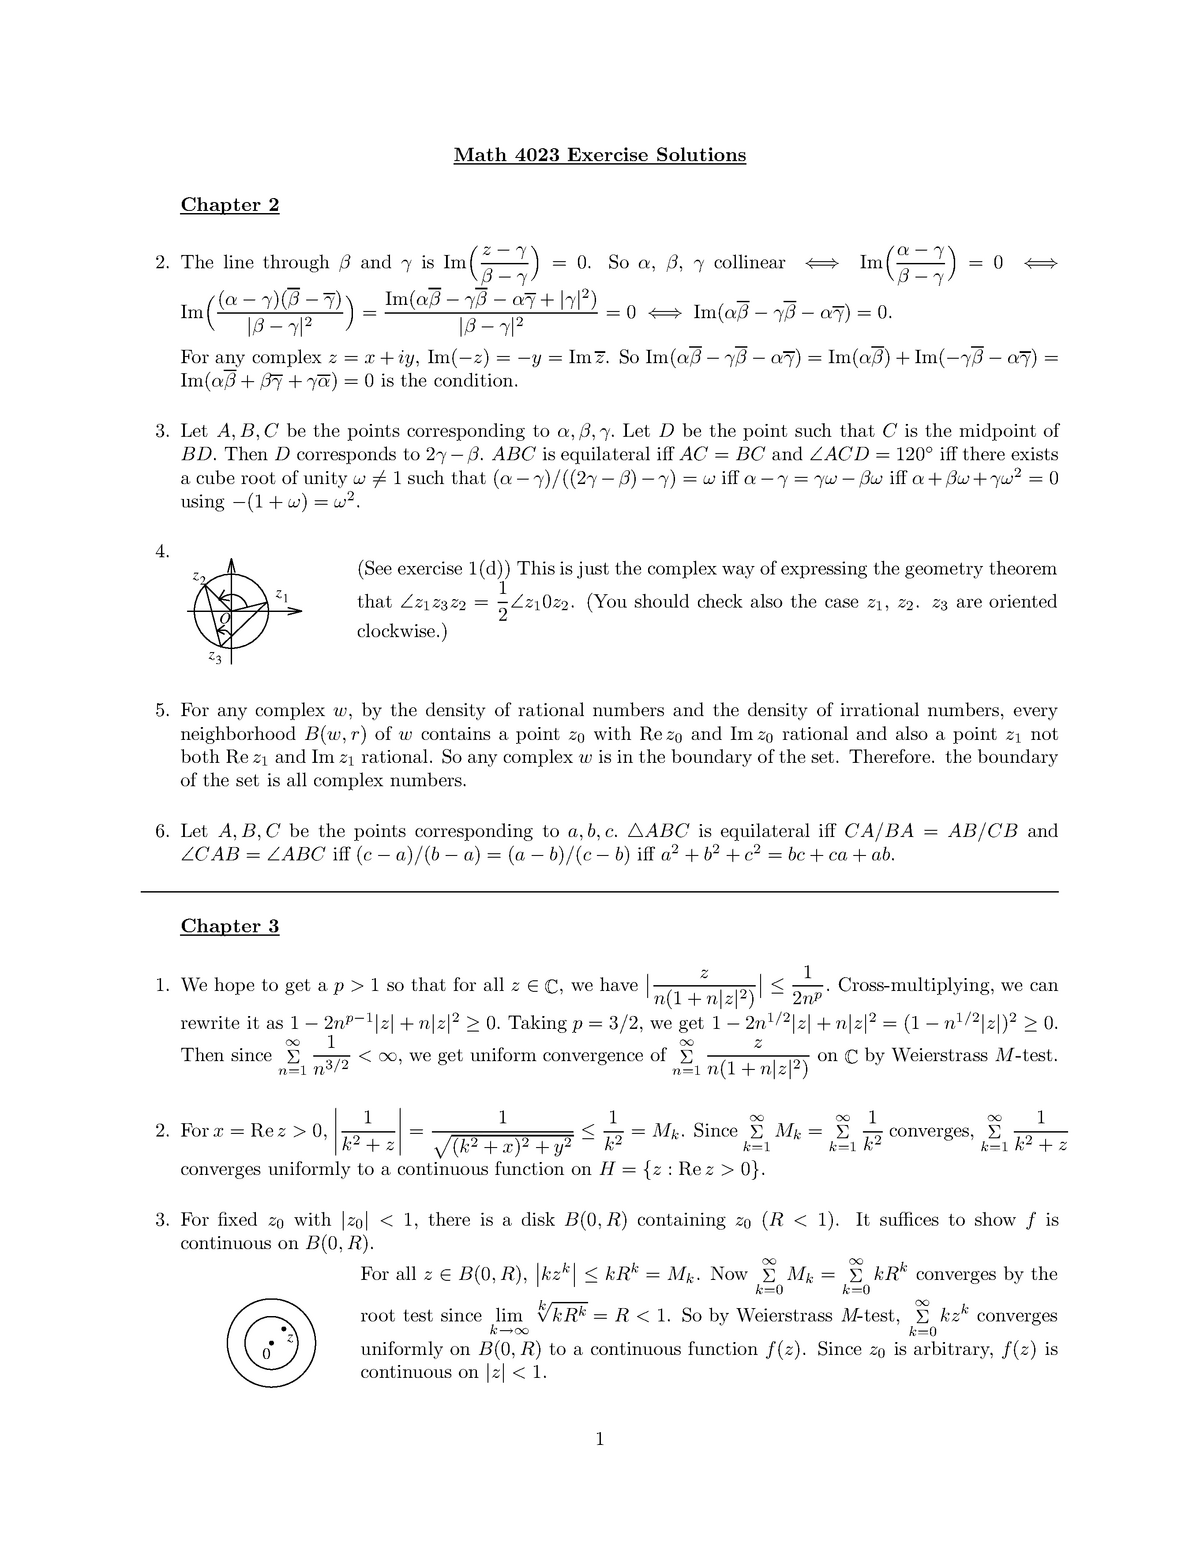 Math 4023 Presentation Exercise Chapter 2 3 Studocu